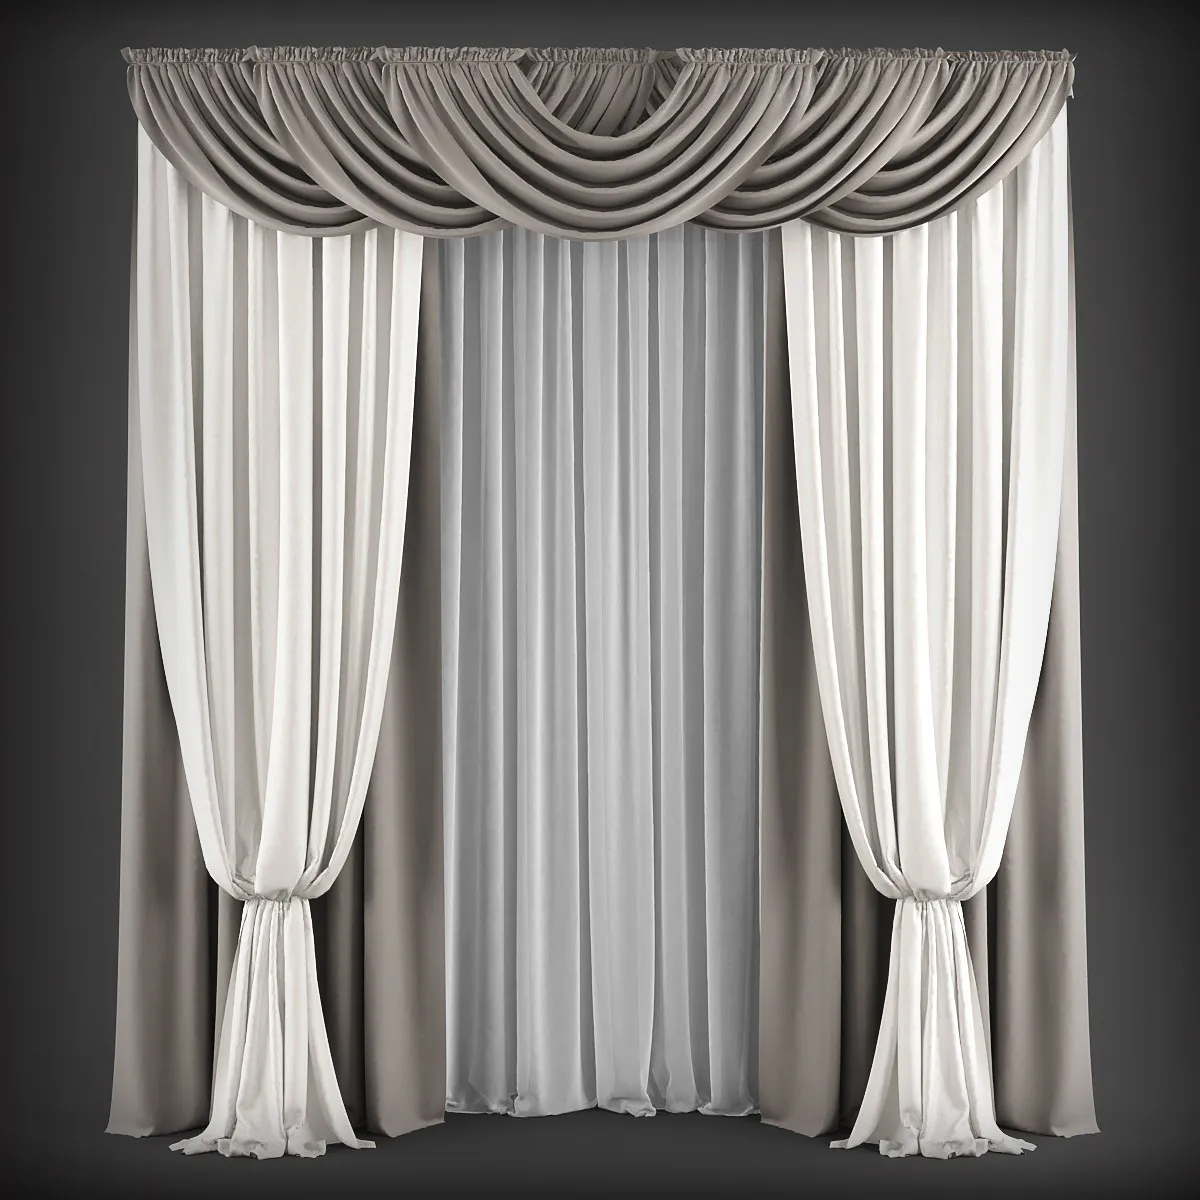 Curtains181 – 4550